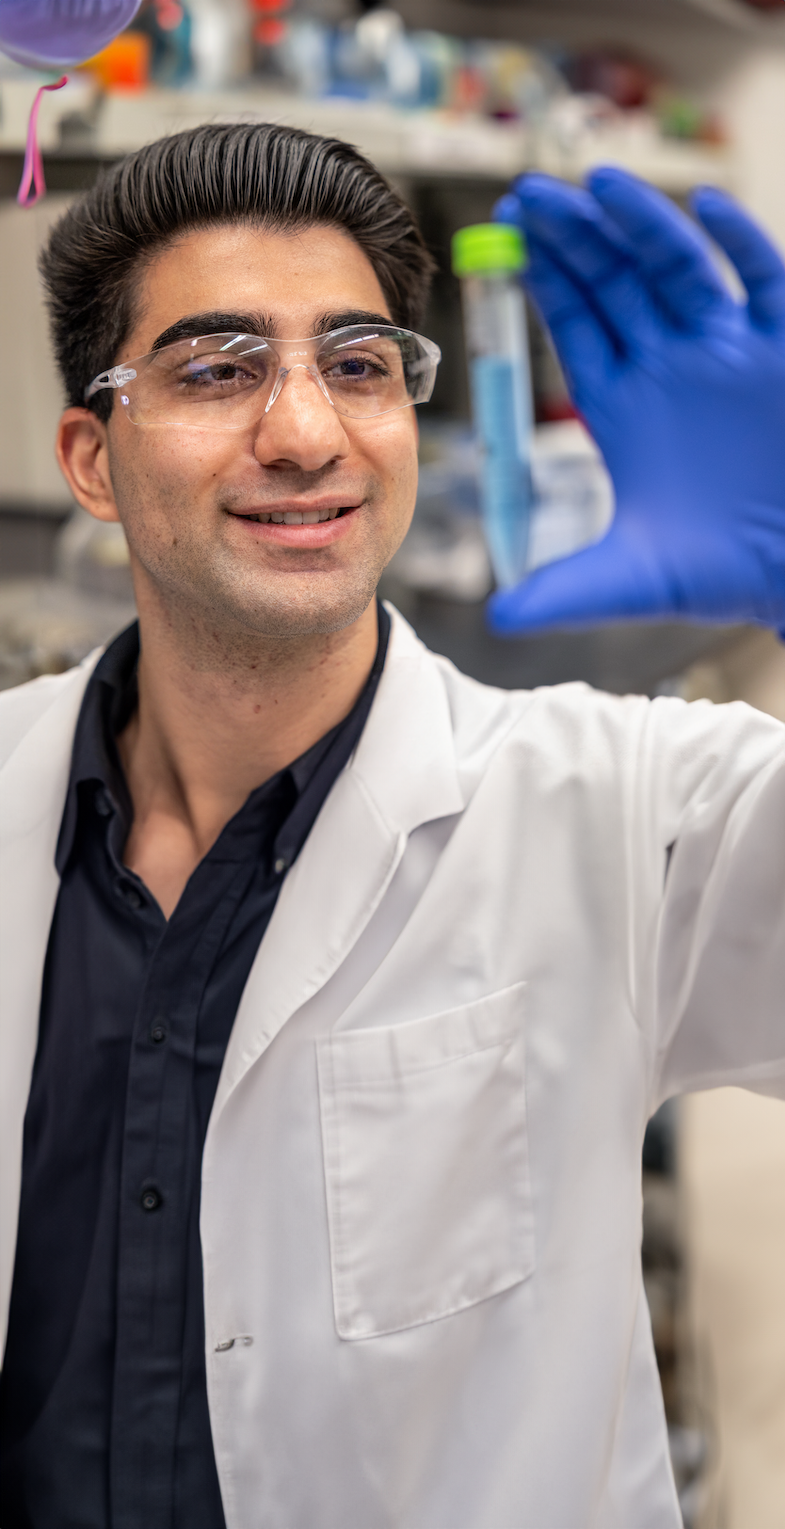 A-S-U professor in a lab coat holding a flask containing a blue liquid